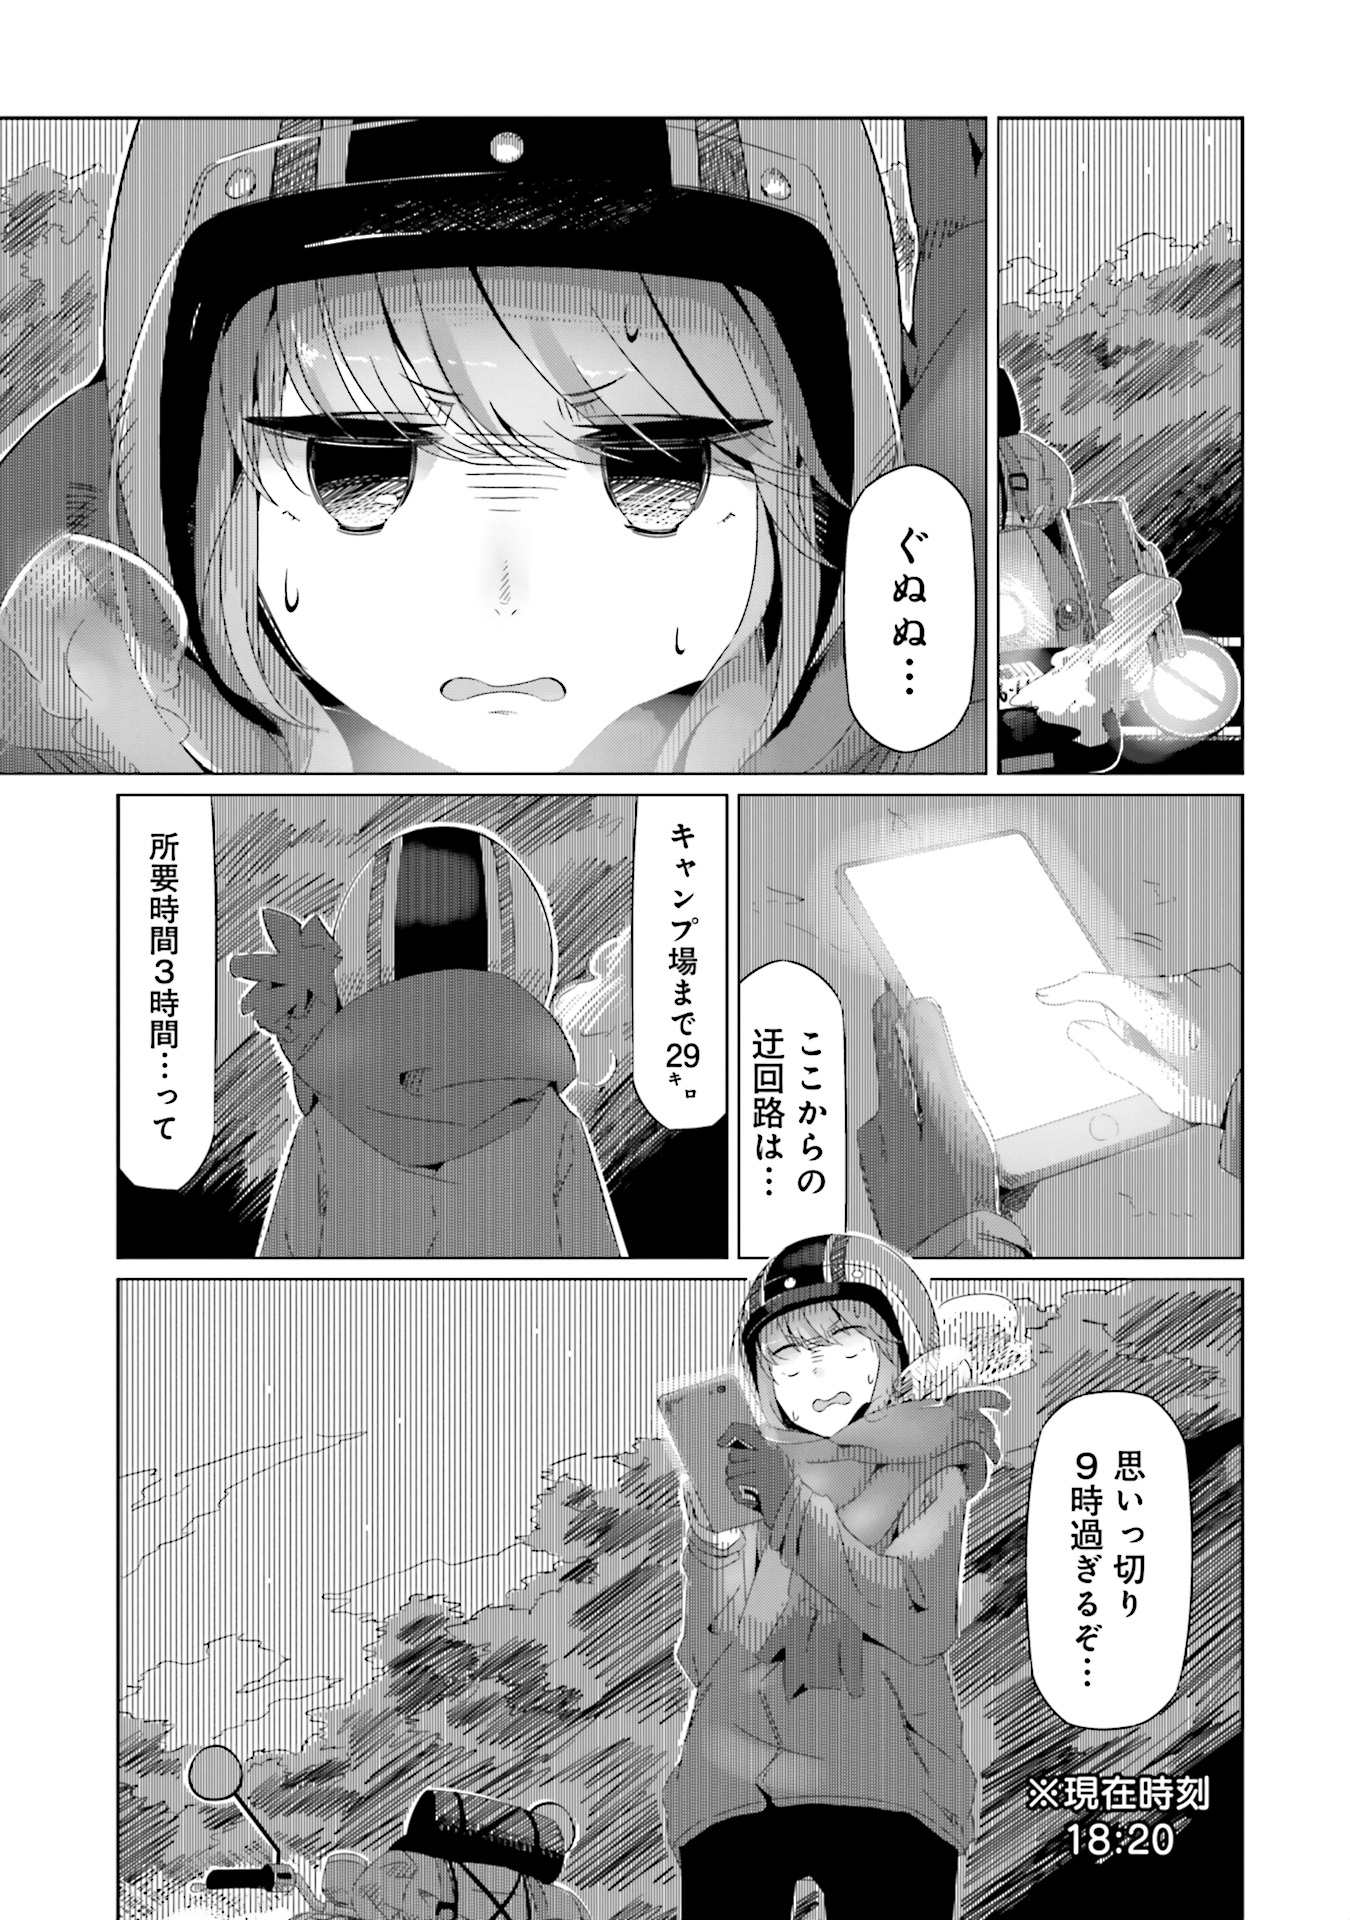 Yuru Camp - Chapter 18 - Page 1